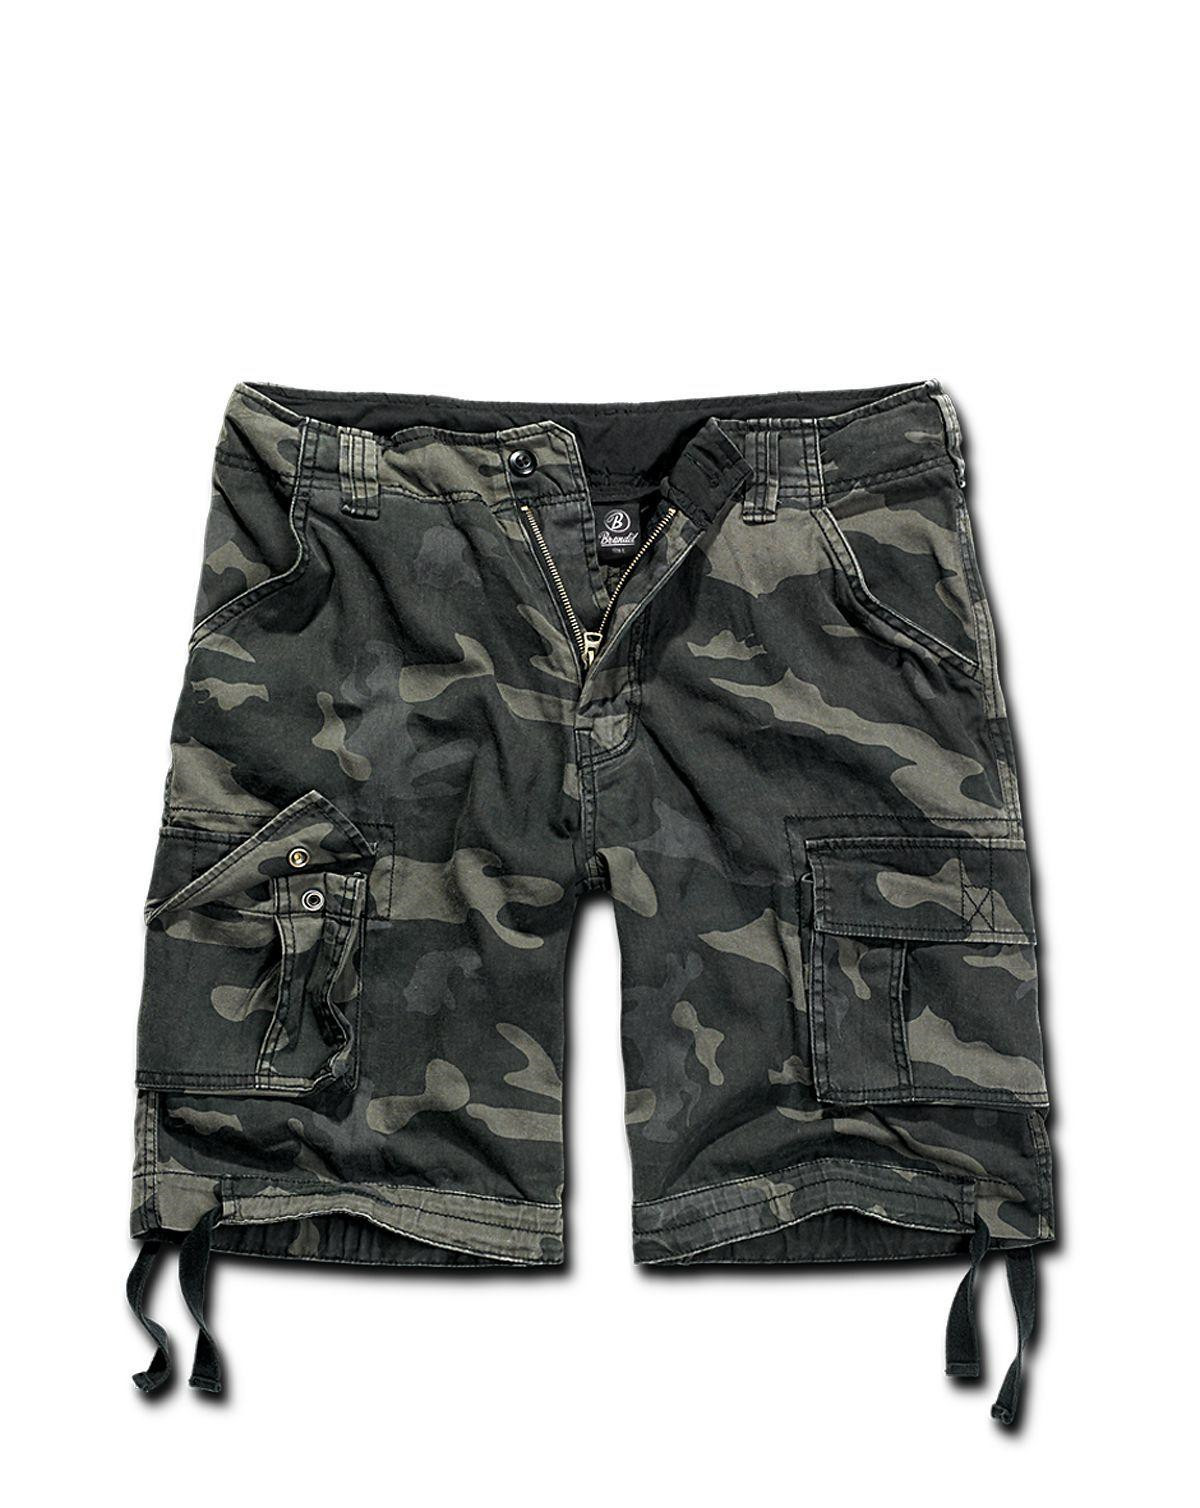 Brandit Urban Legend Shorts (Black Camo, S)